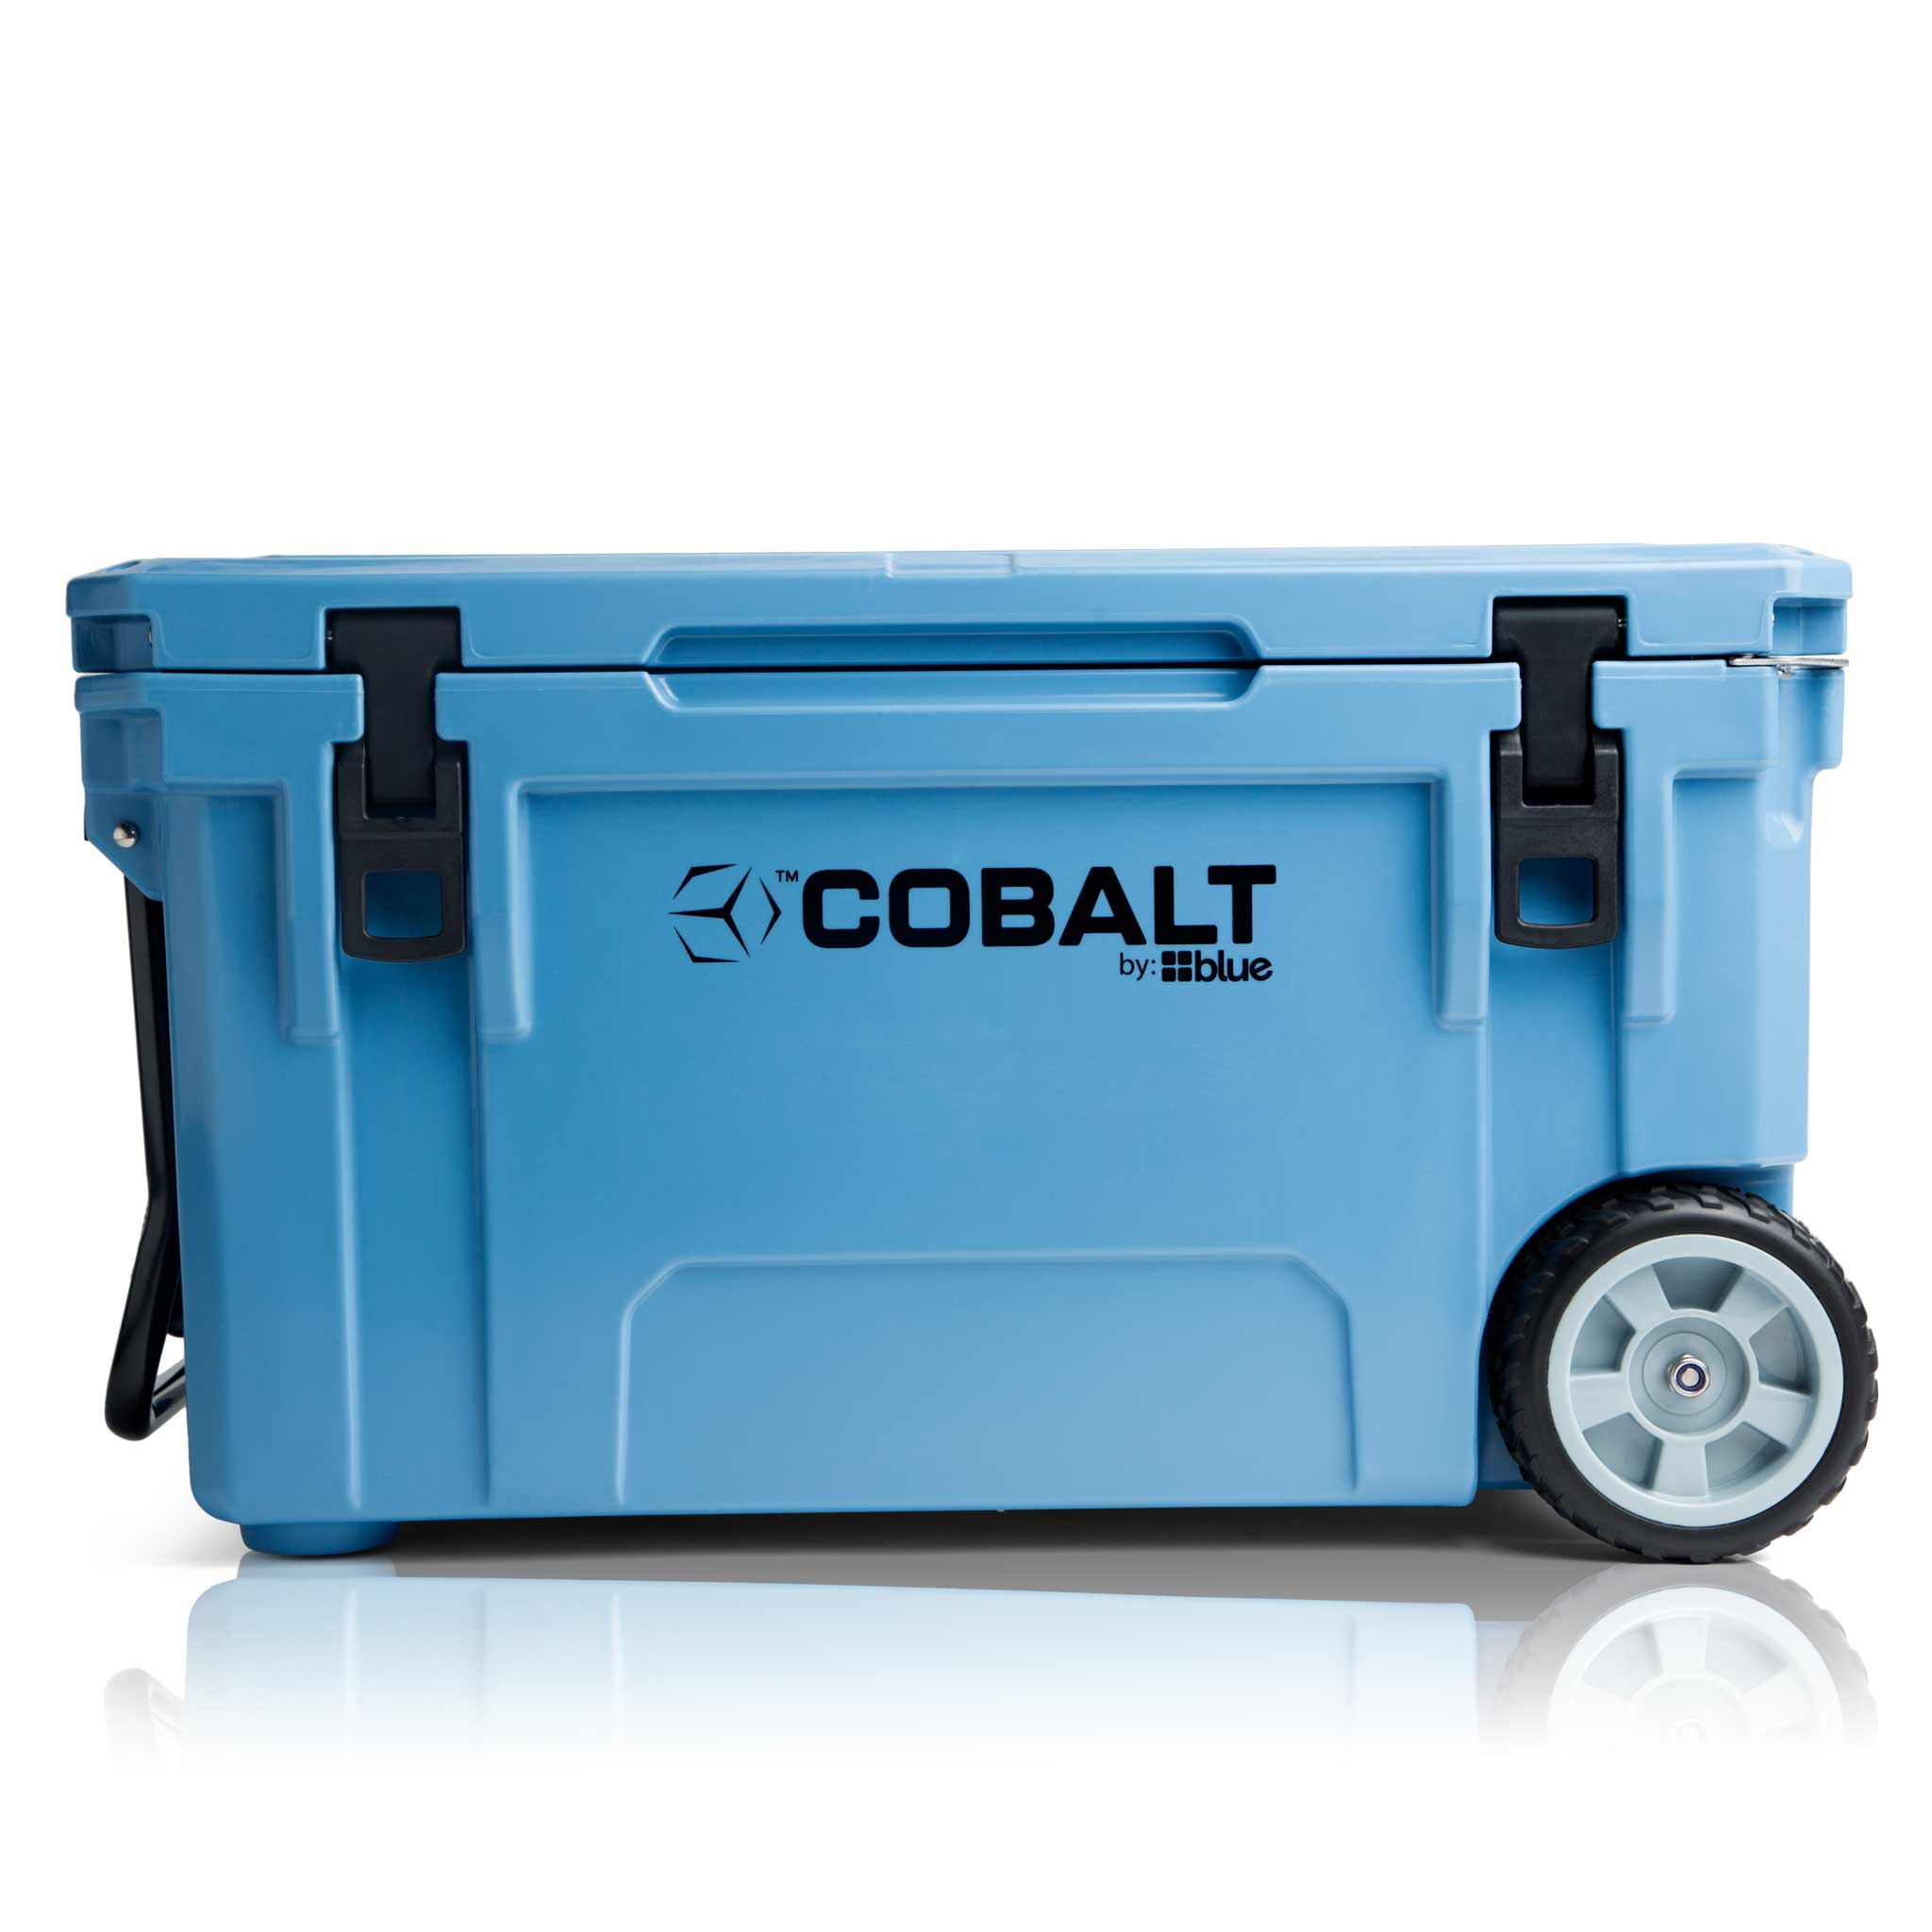 Cobalt 55 Quart with Wheels Roto-Molded Super Cooler